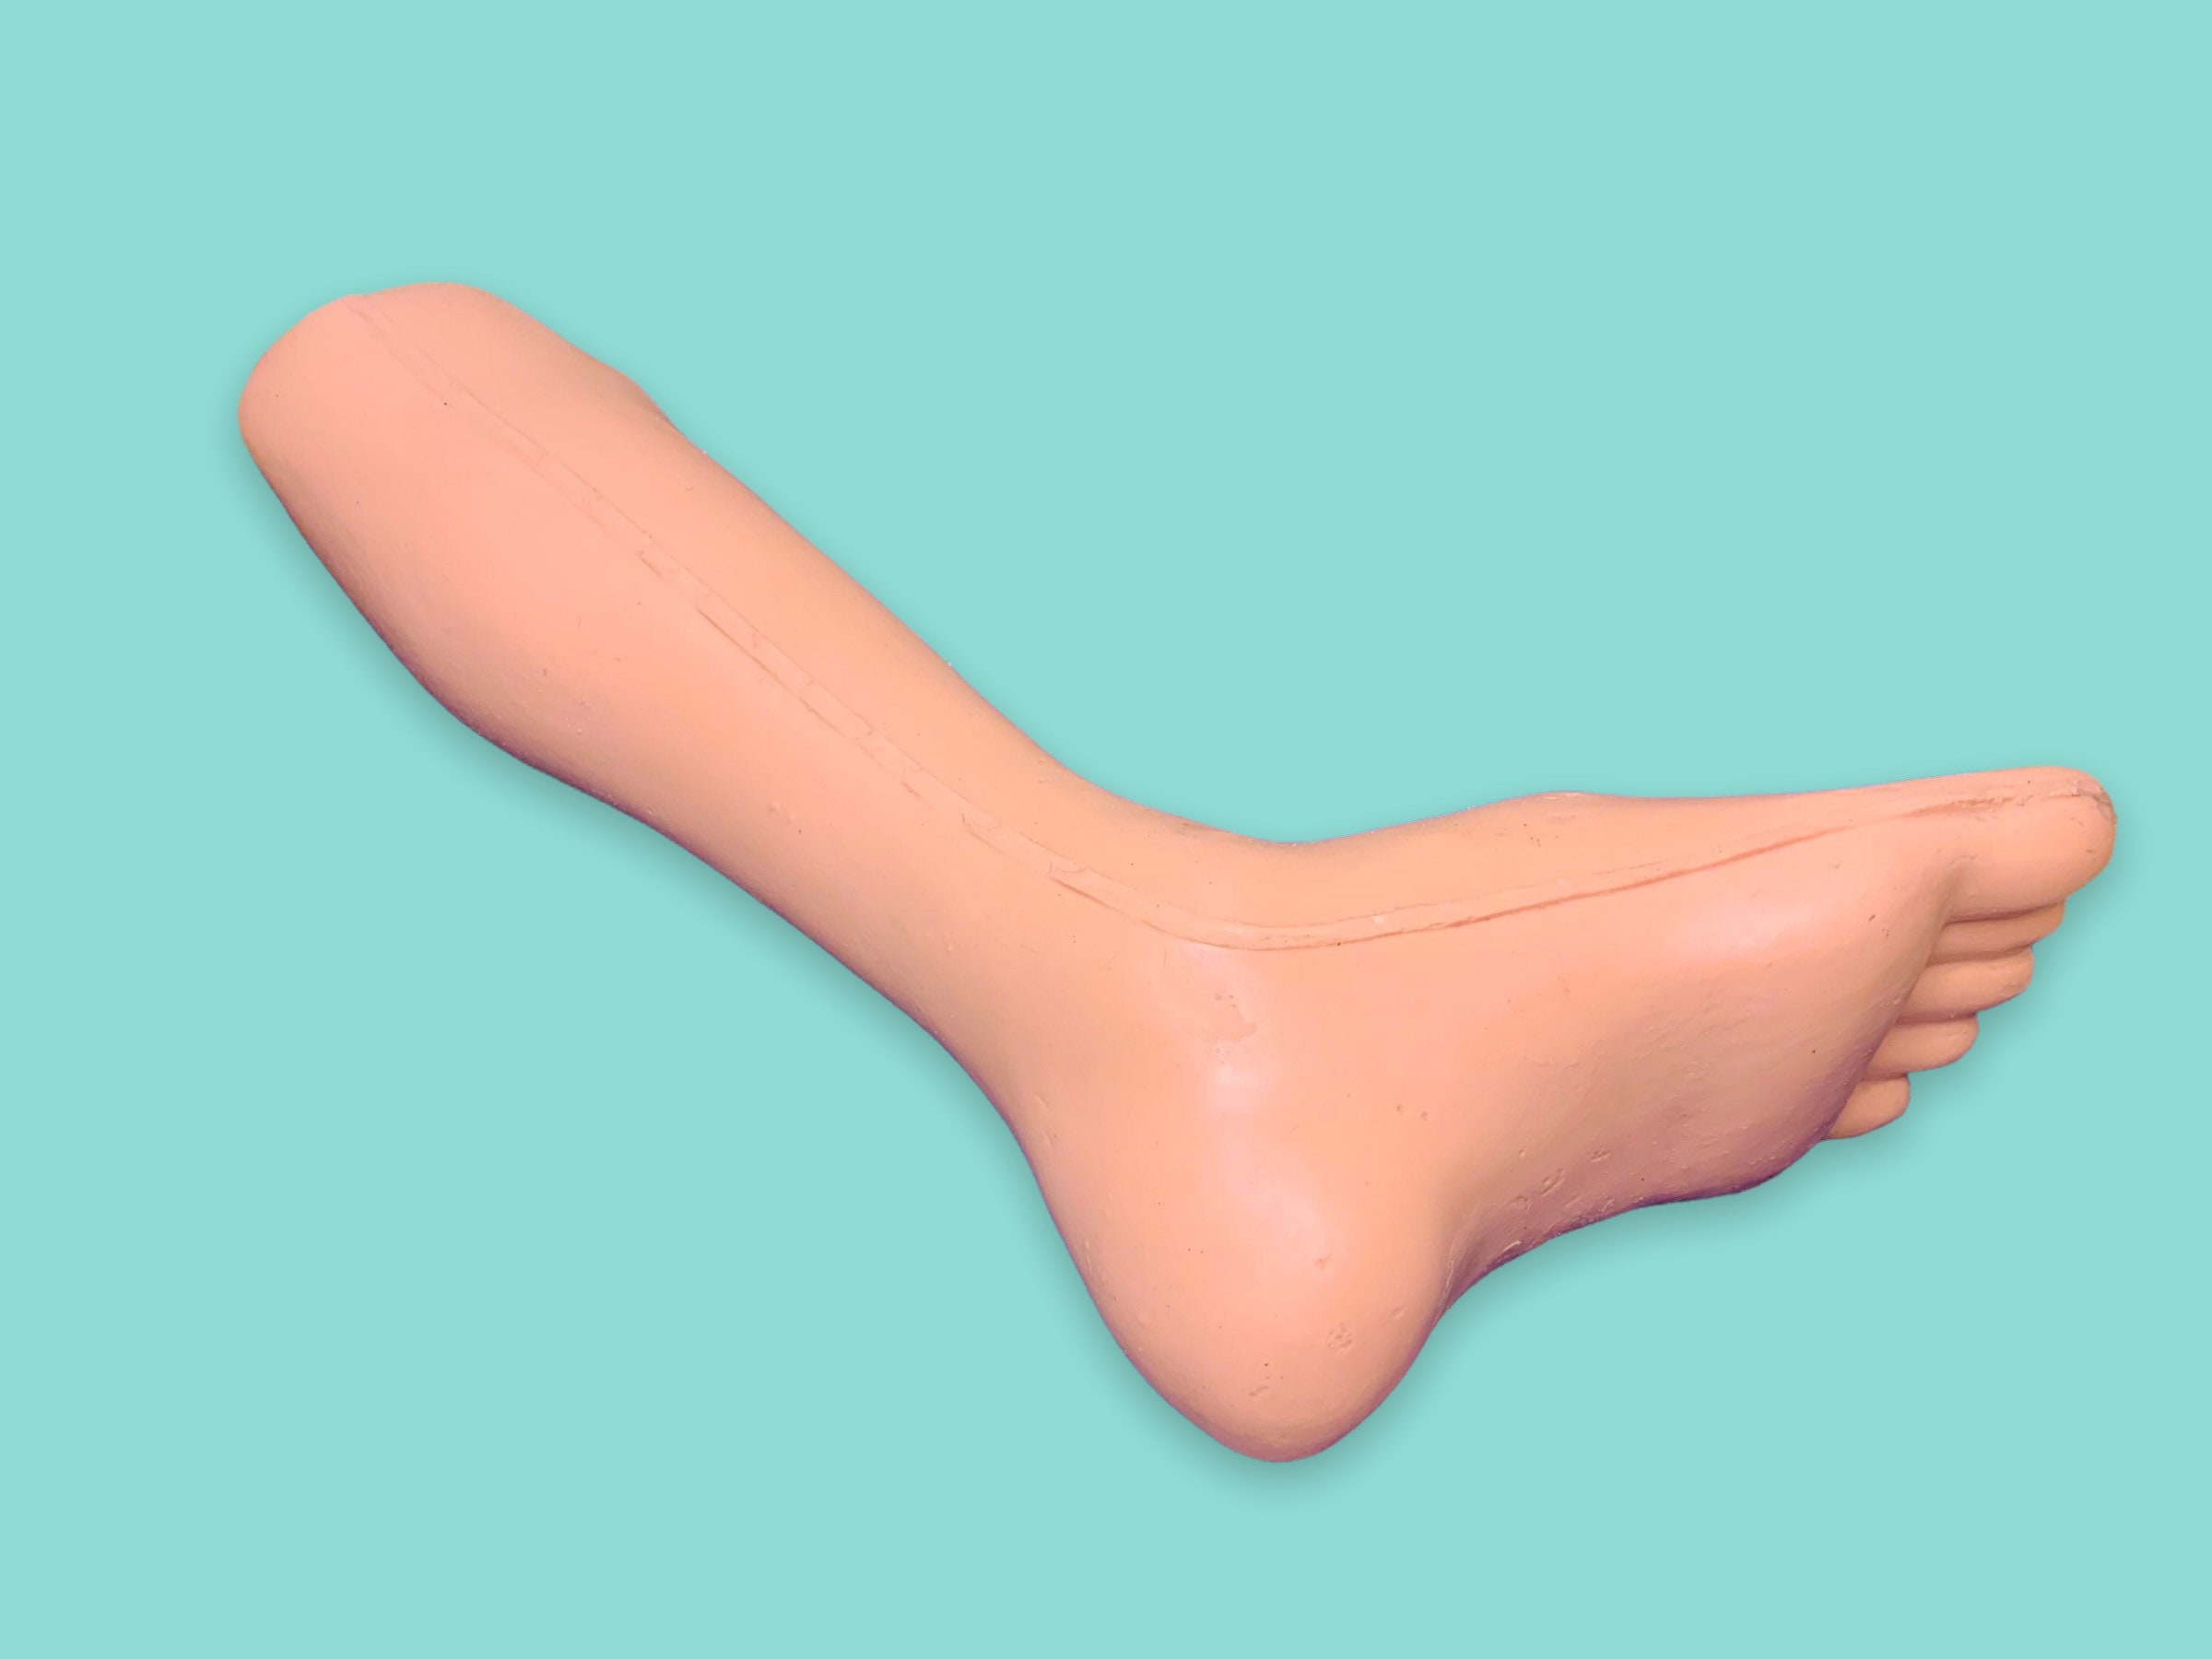 Realistic Silicone Female Right Foot 